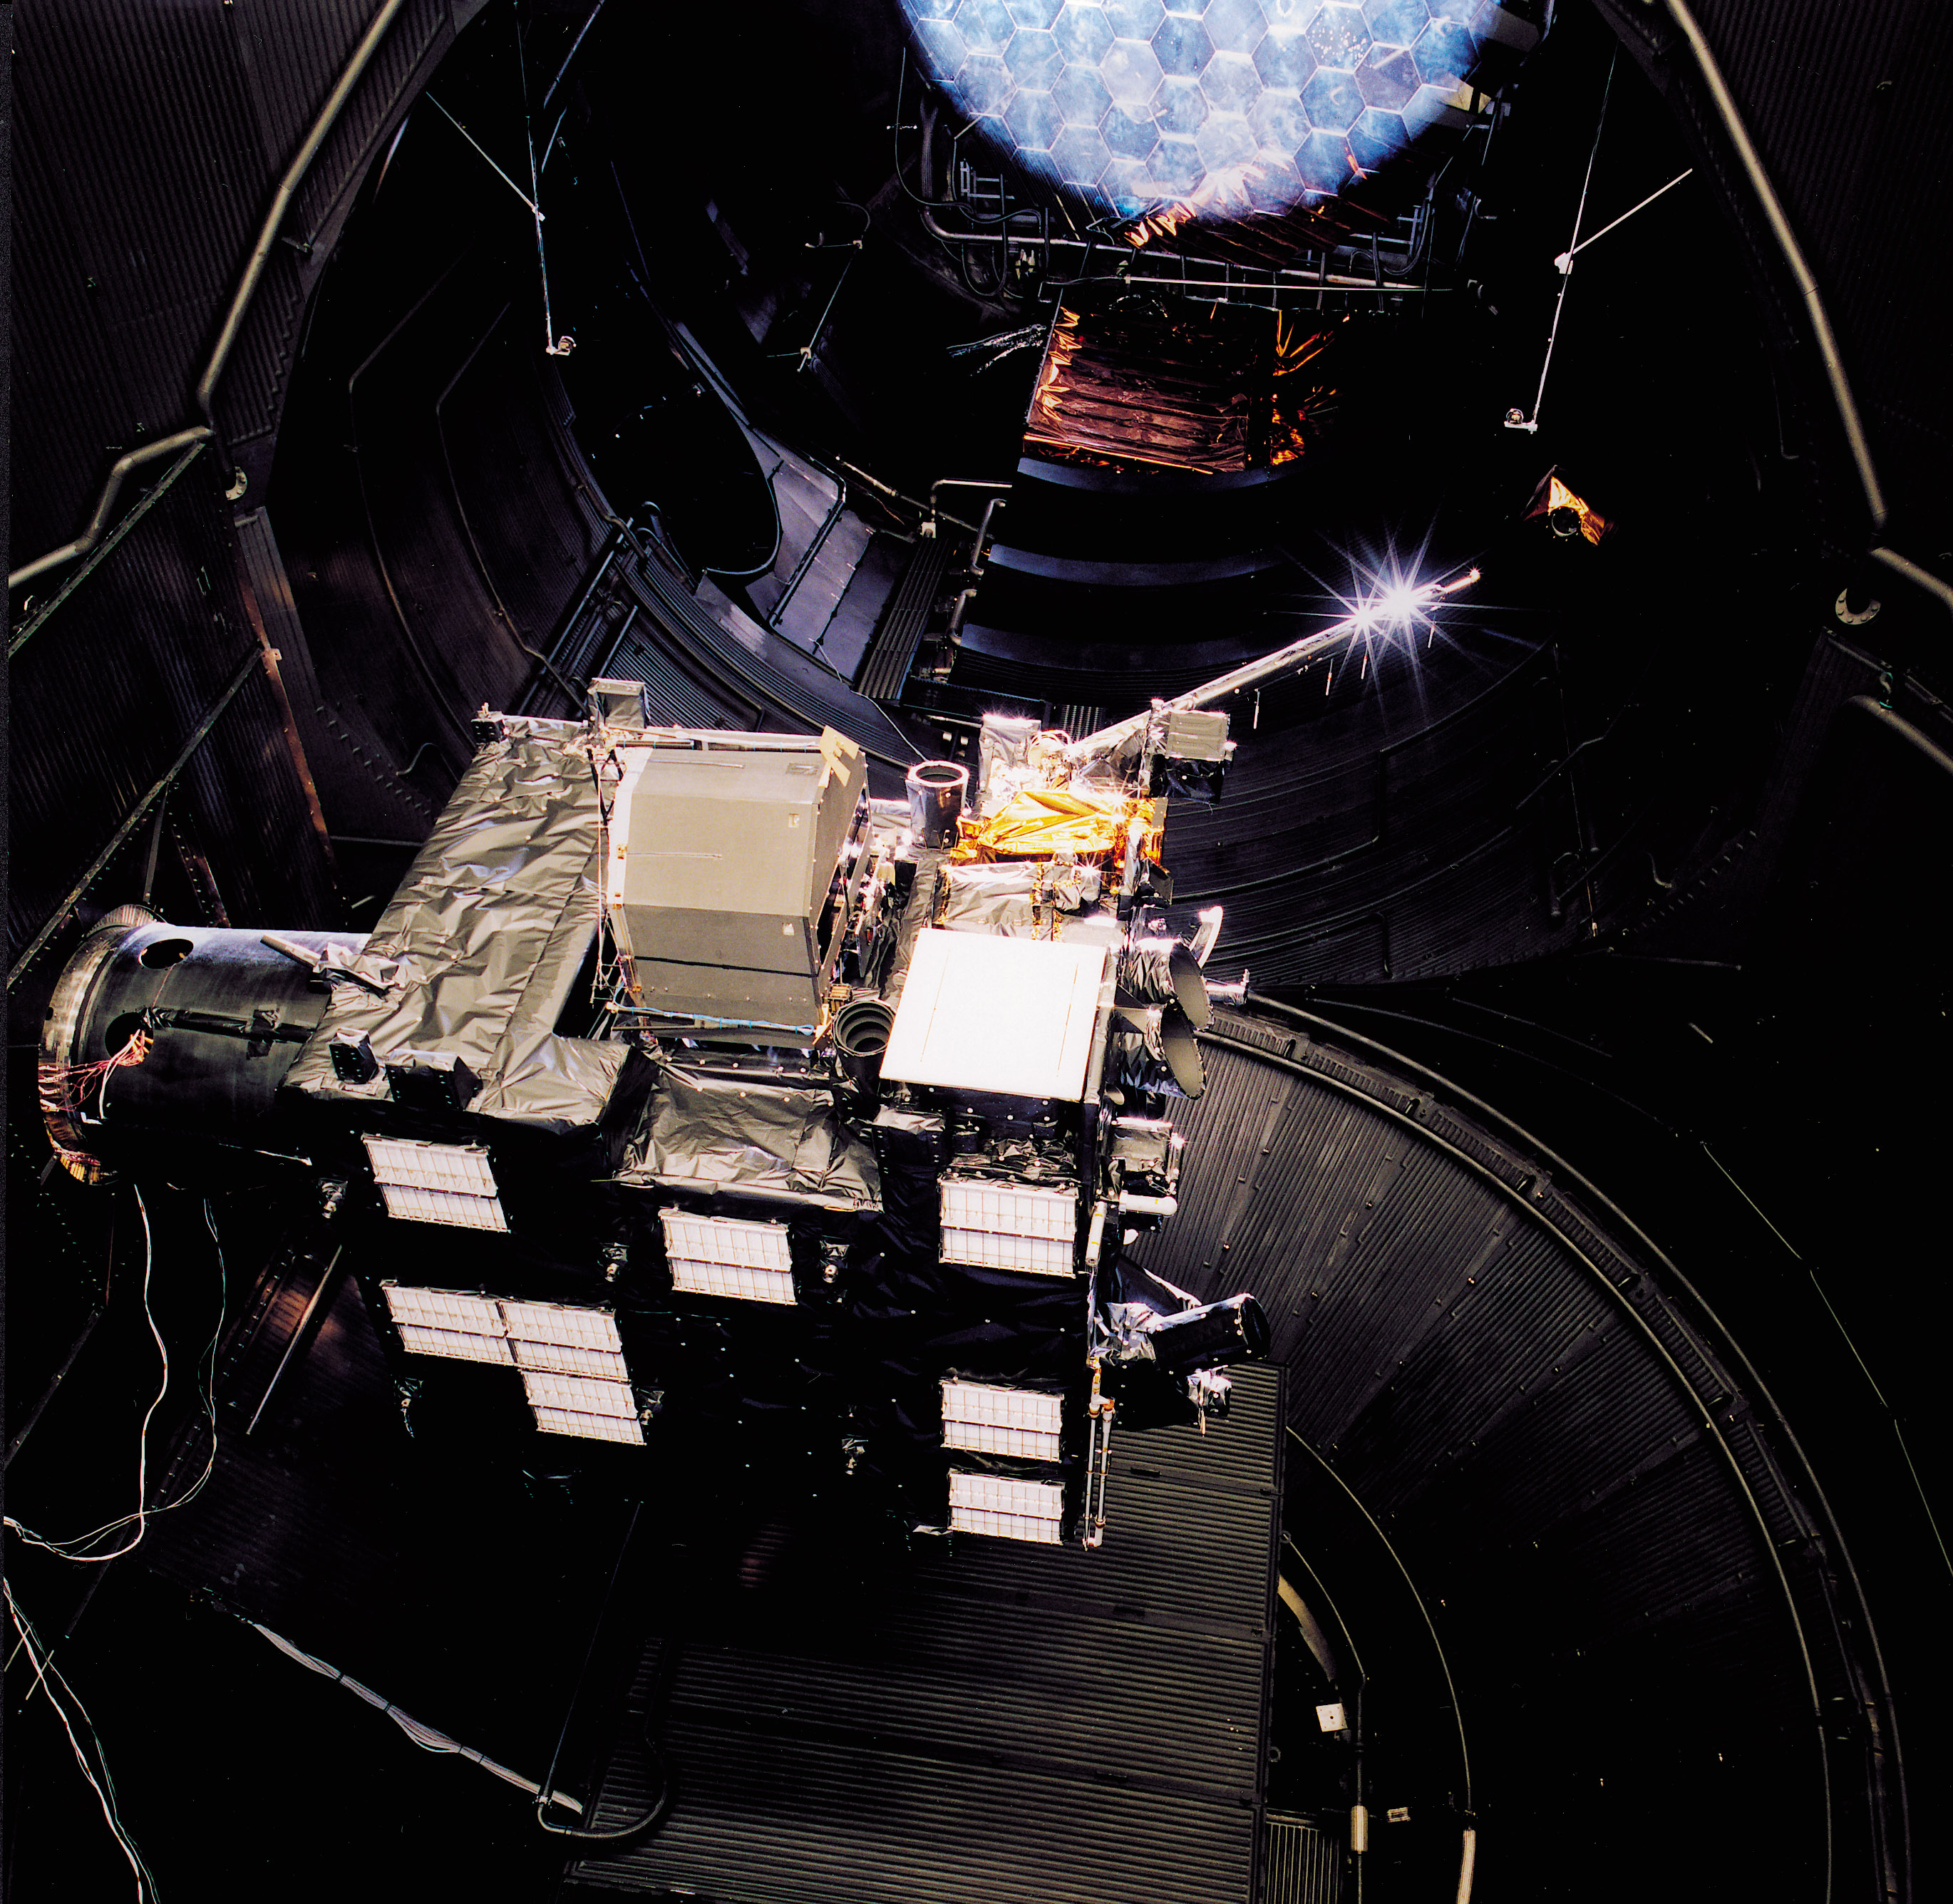 Misión Rosetta (ESA)